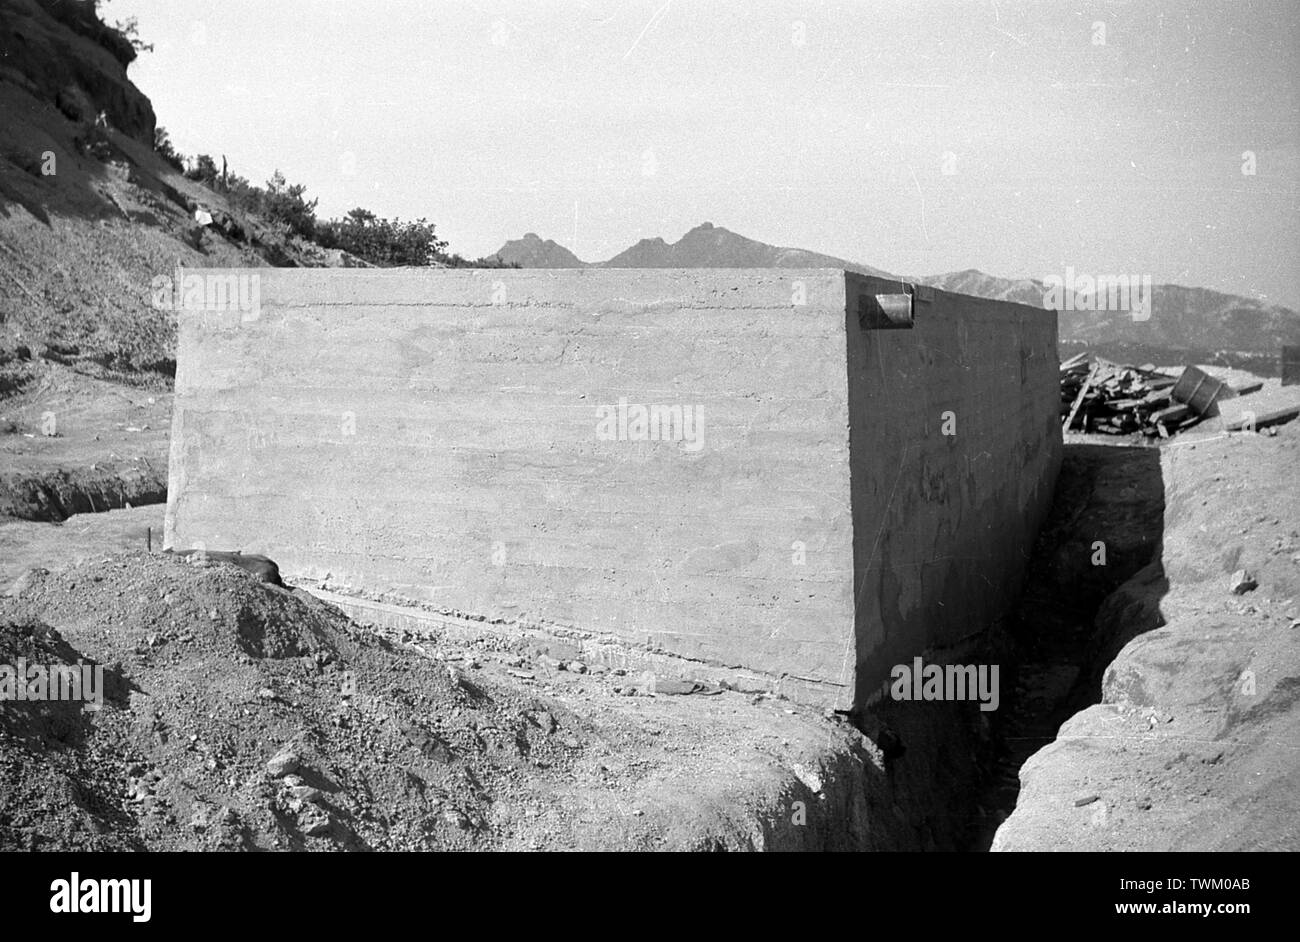 US ARMY in Süd Korea 1955 Bunkerbau - US Army in the Republic of Korea (ROK) / South Korea 1955 Bunker Construction Stock Photo